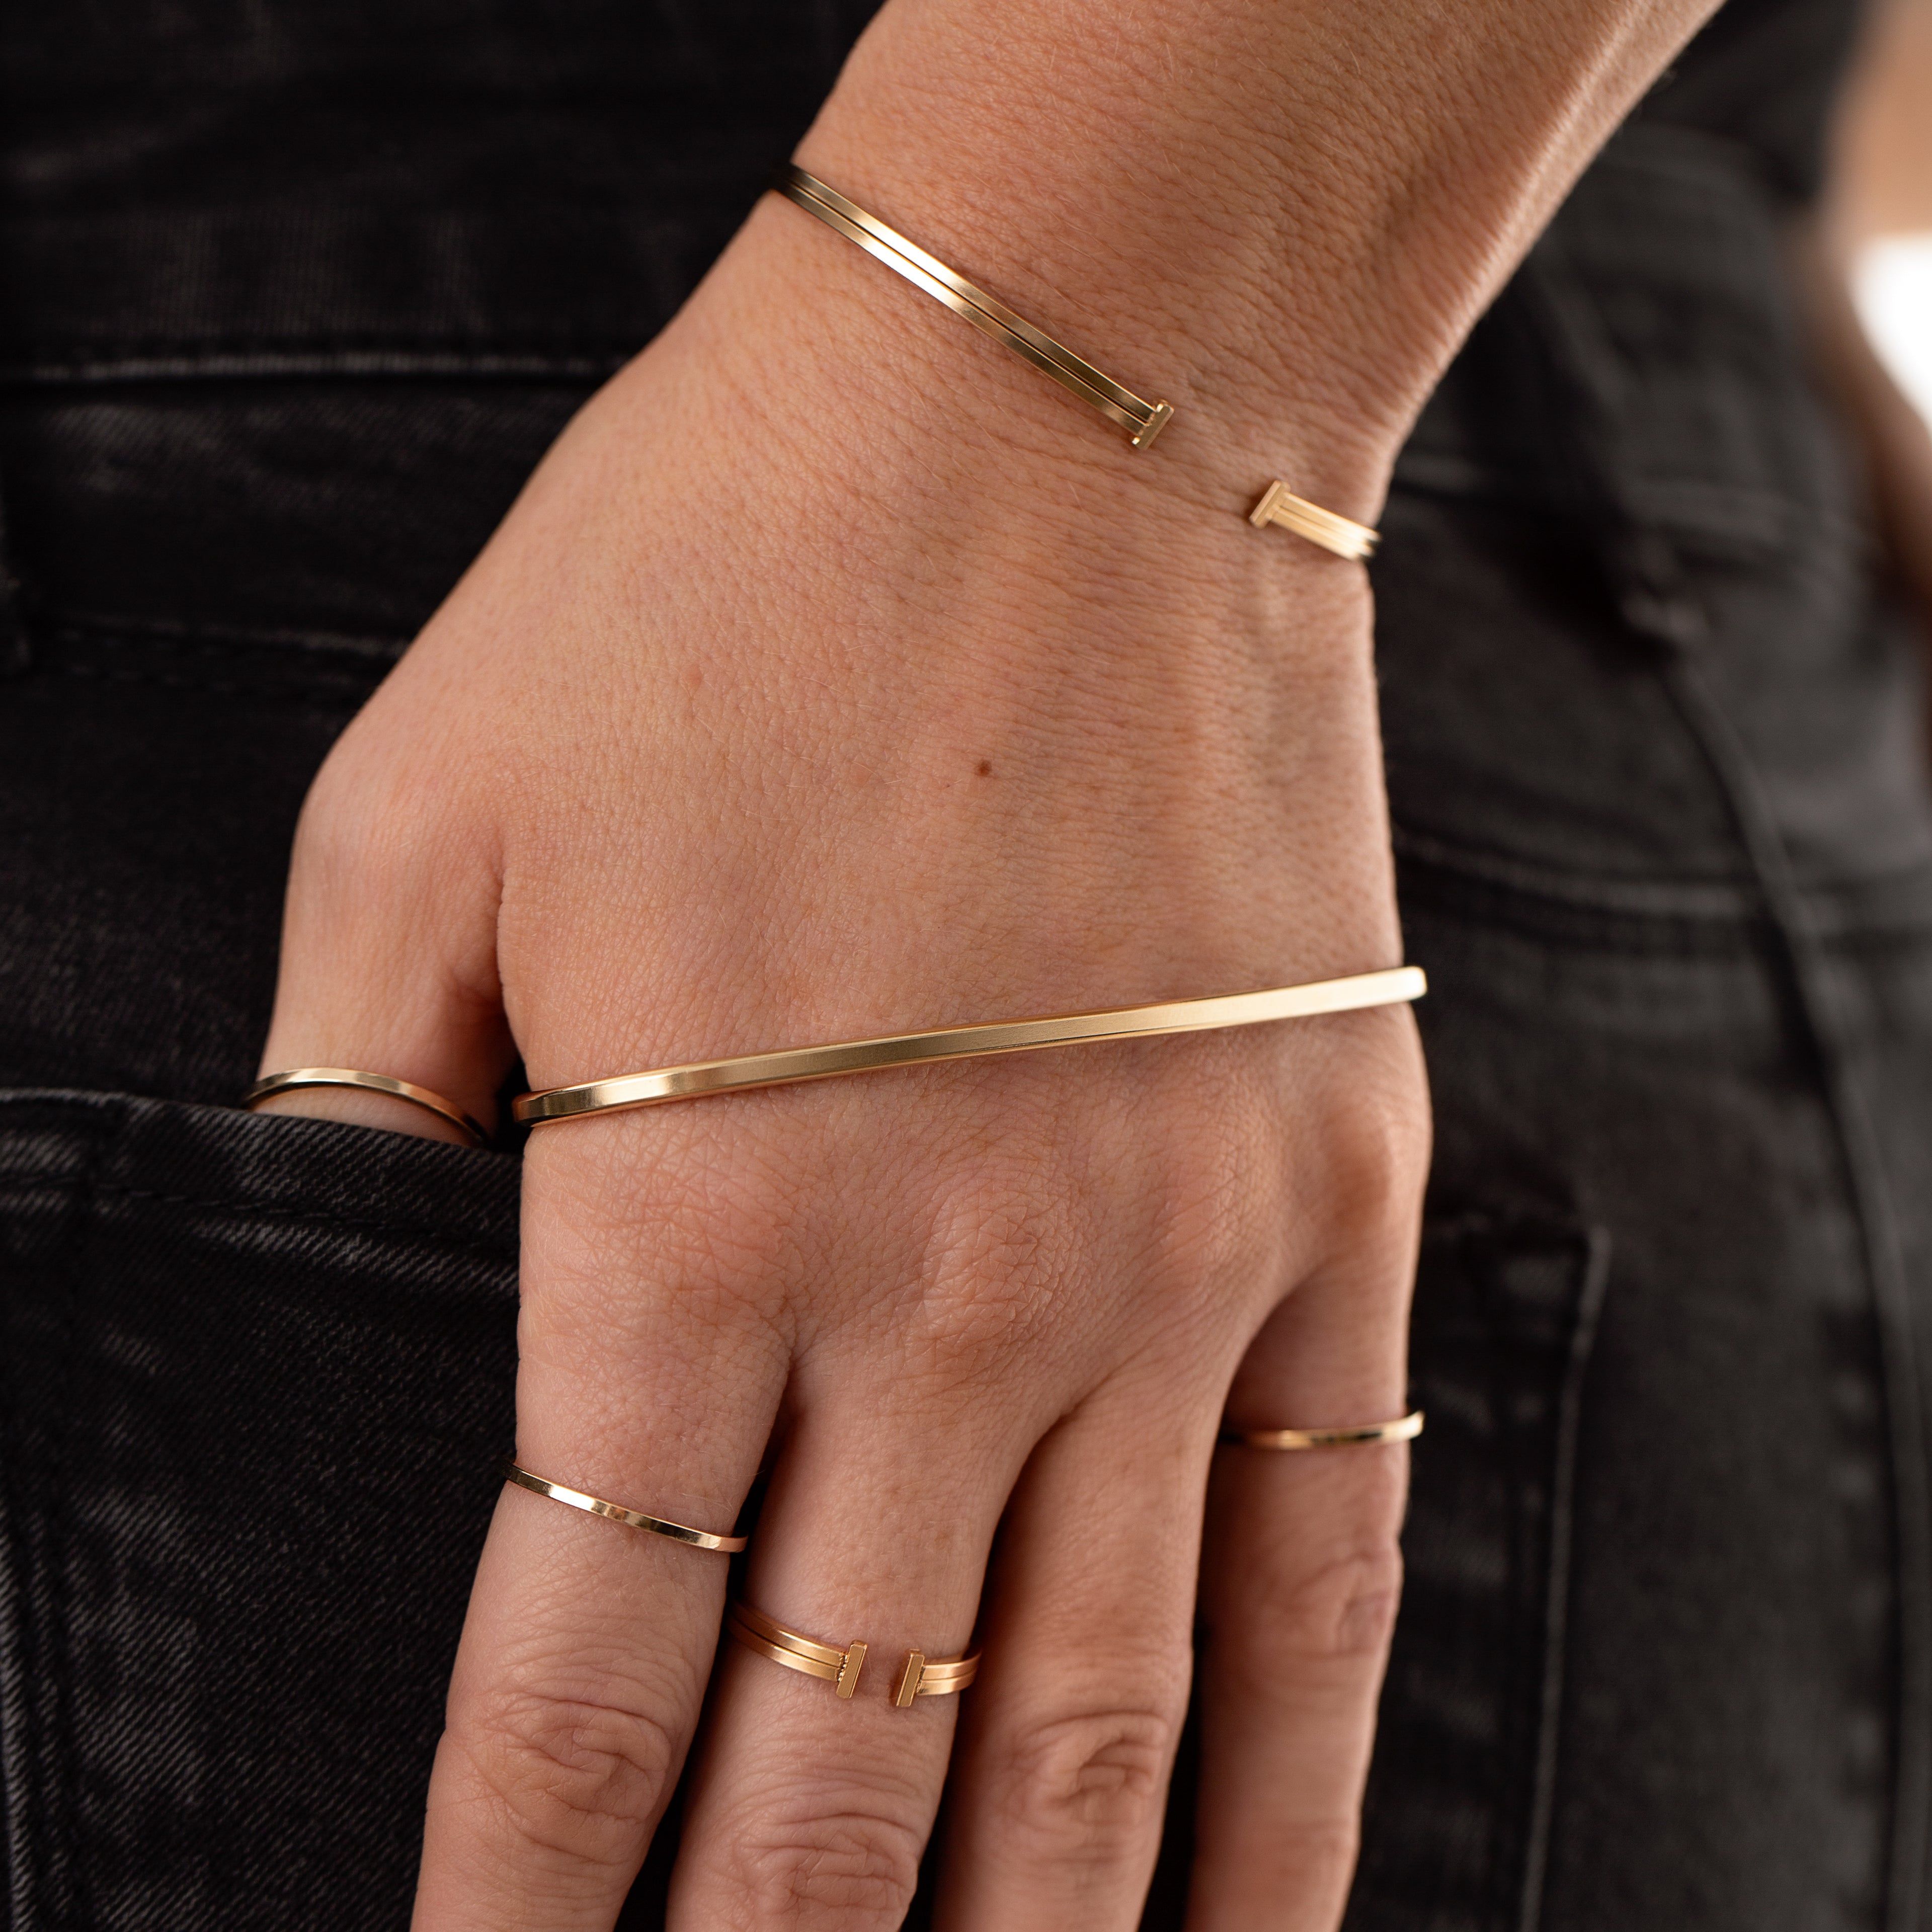 Beautiful and unique hand cuff | Palm ring Design idea's | GIRLS CORNER |  Palm ring, Ring designs, Cuff